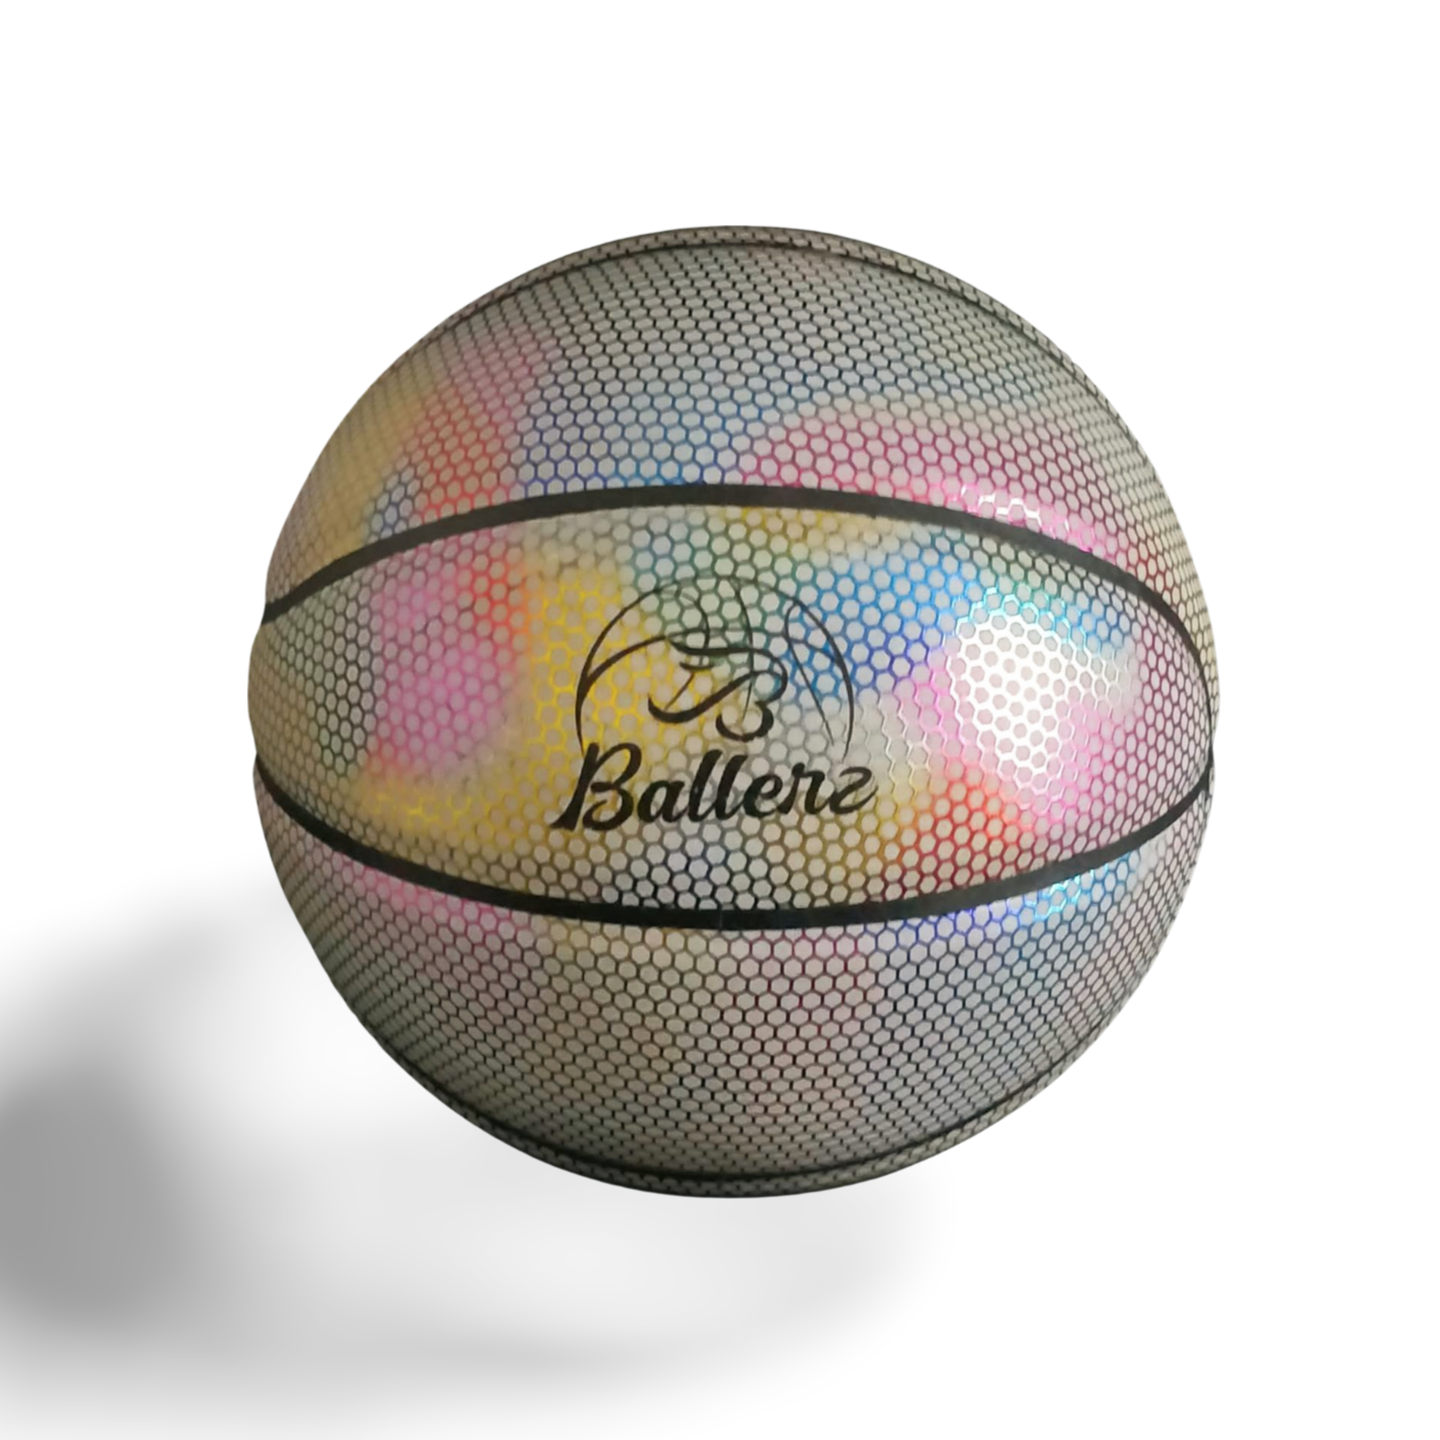 Ballon De Basket Lumineux